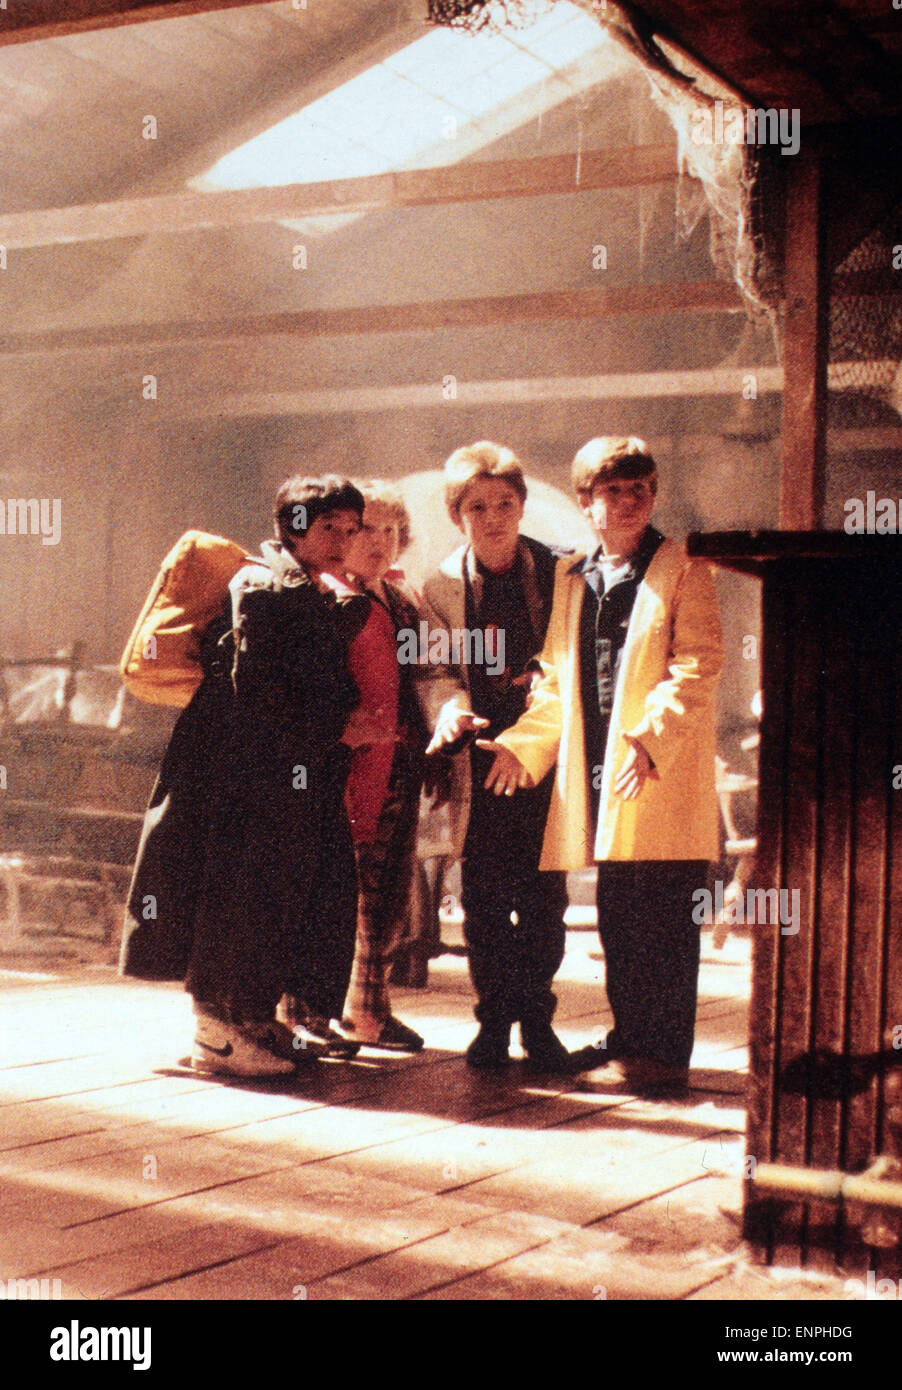 Les Goonies, aka : The Goonies, USA 1985, Regie : Richard Donner, acteurs : Ke Huy Quan, Jeff Cohen, Corey Feldman, Sean Astin Banque D'Images